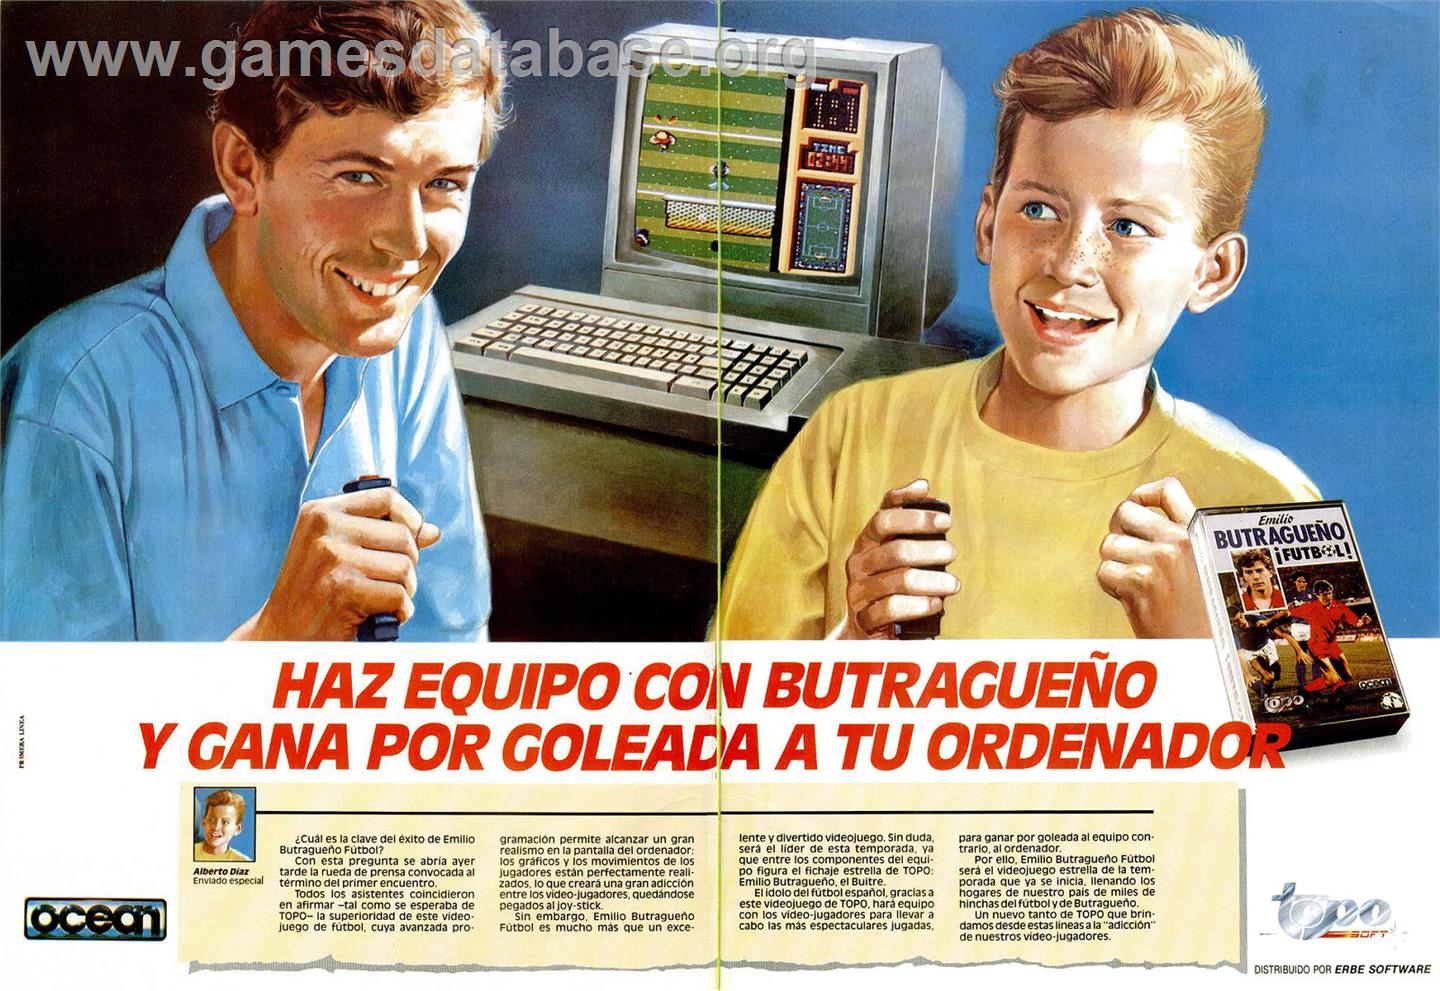 Emilio Butragueño Fútbol - Commodore 64 - Artwork - Advert